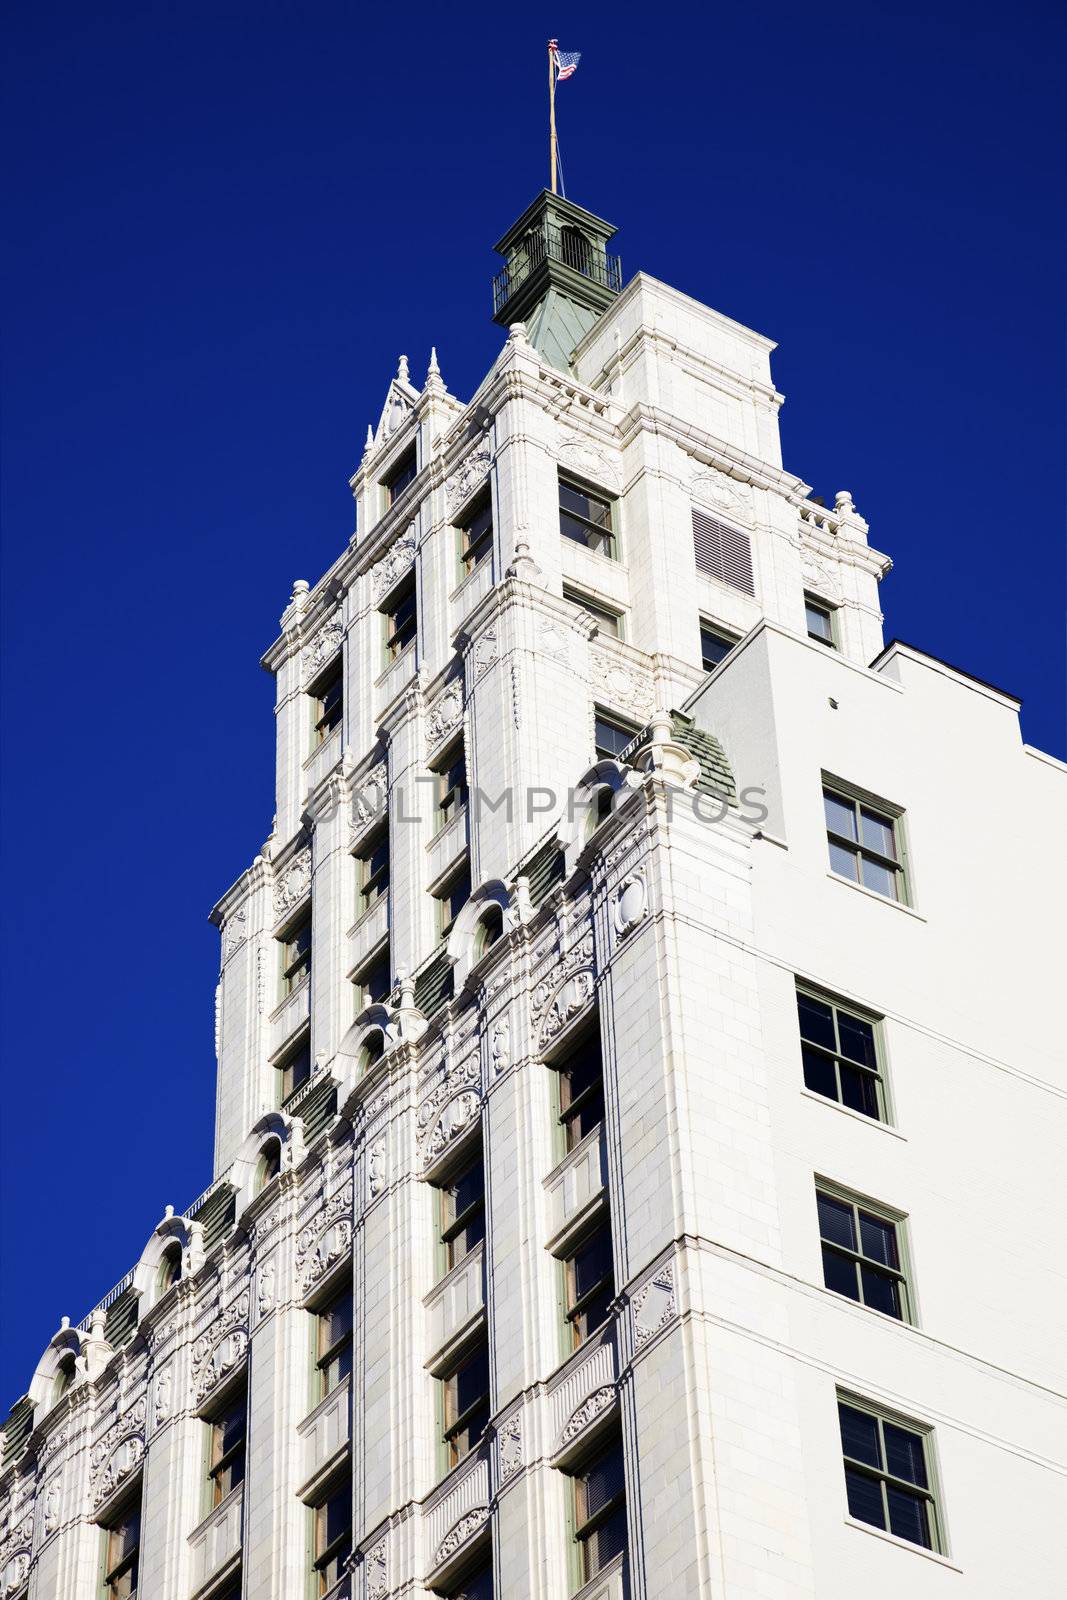 White Building against Blue Sky by benkrut